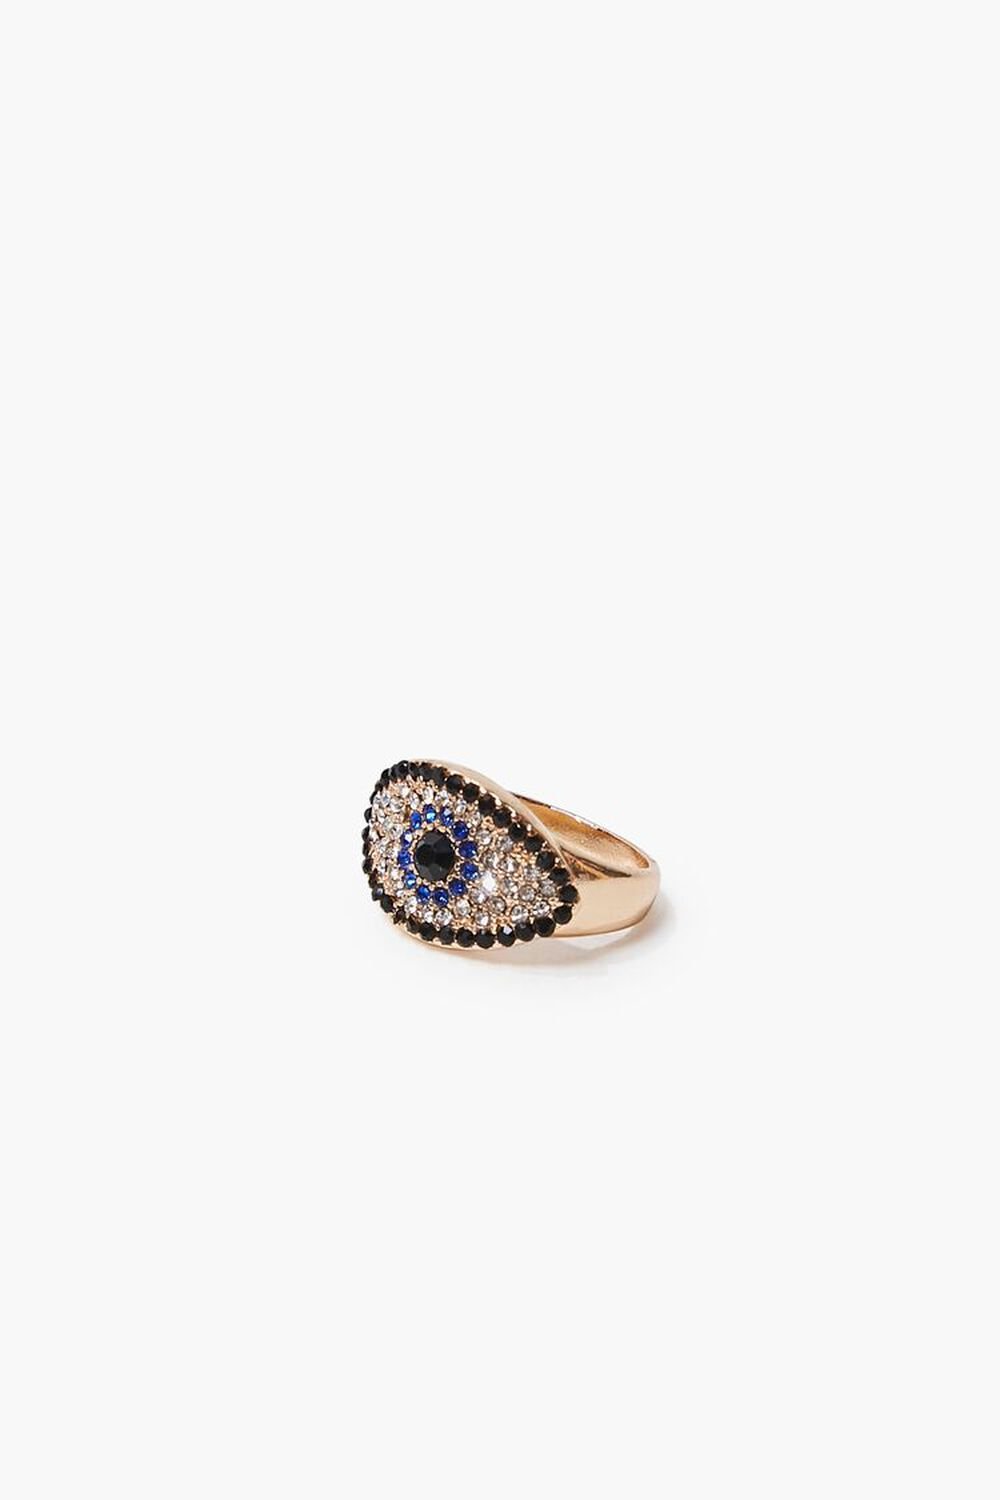 GOLD/CLEAR Rhinestone Evil Eye Charm Ring, image 1